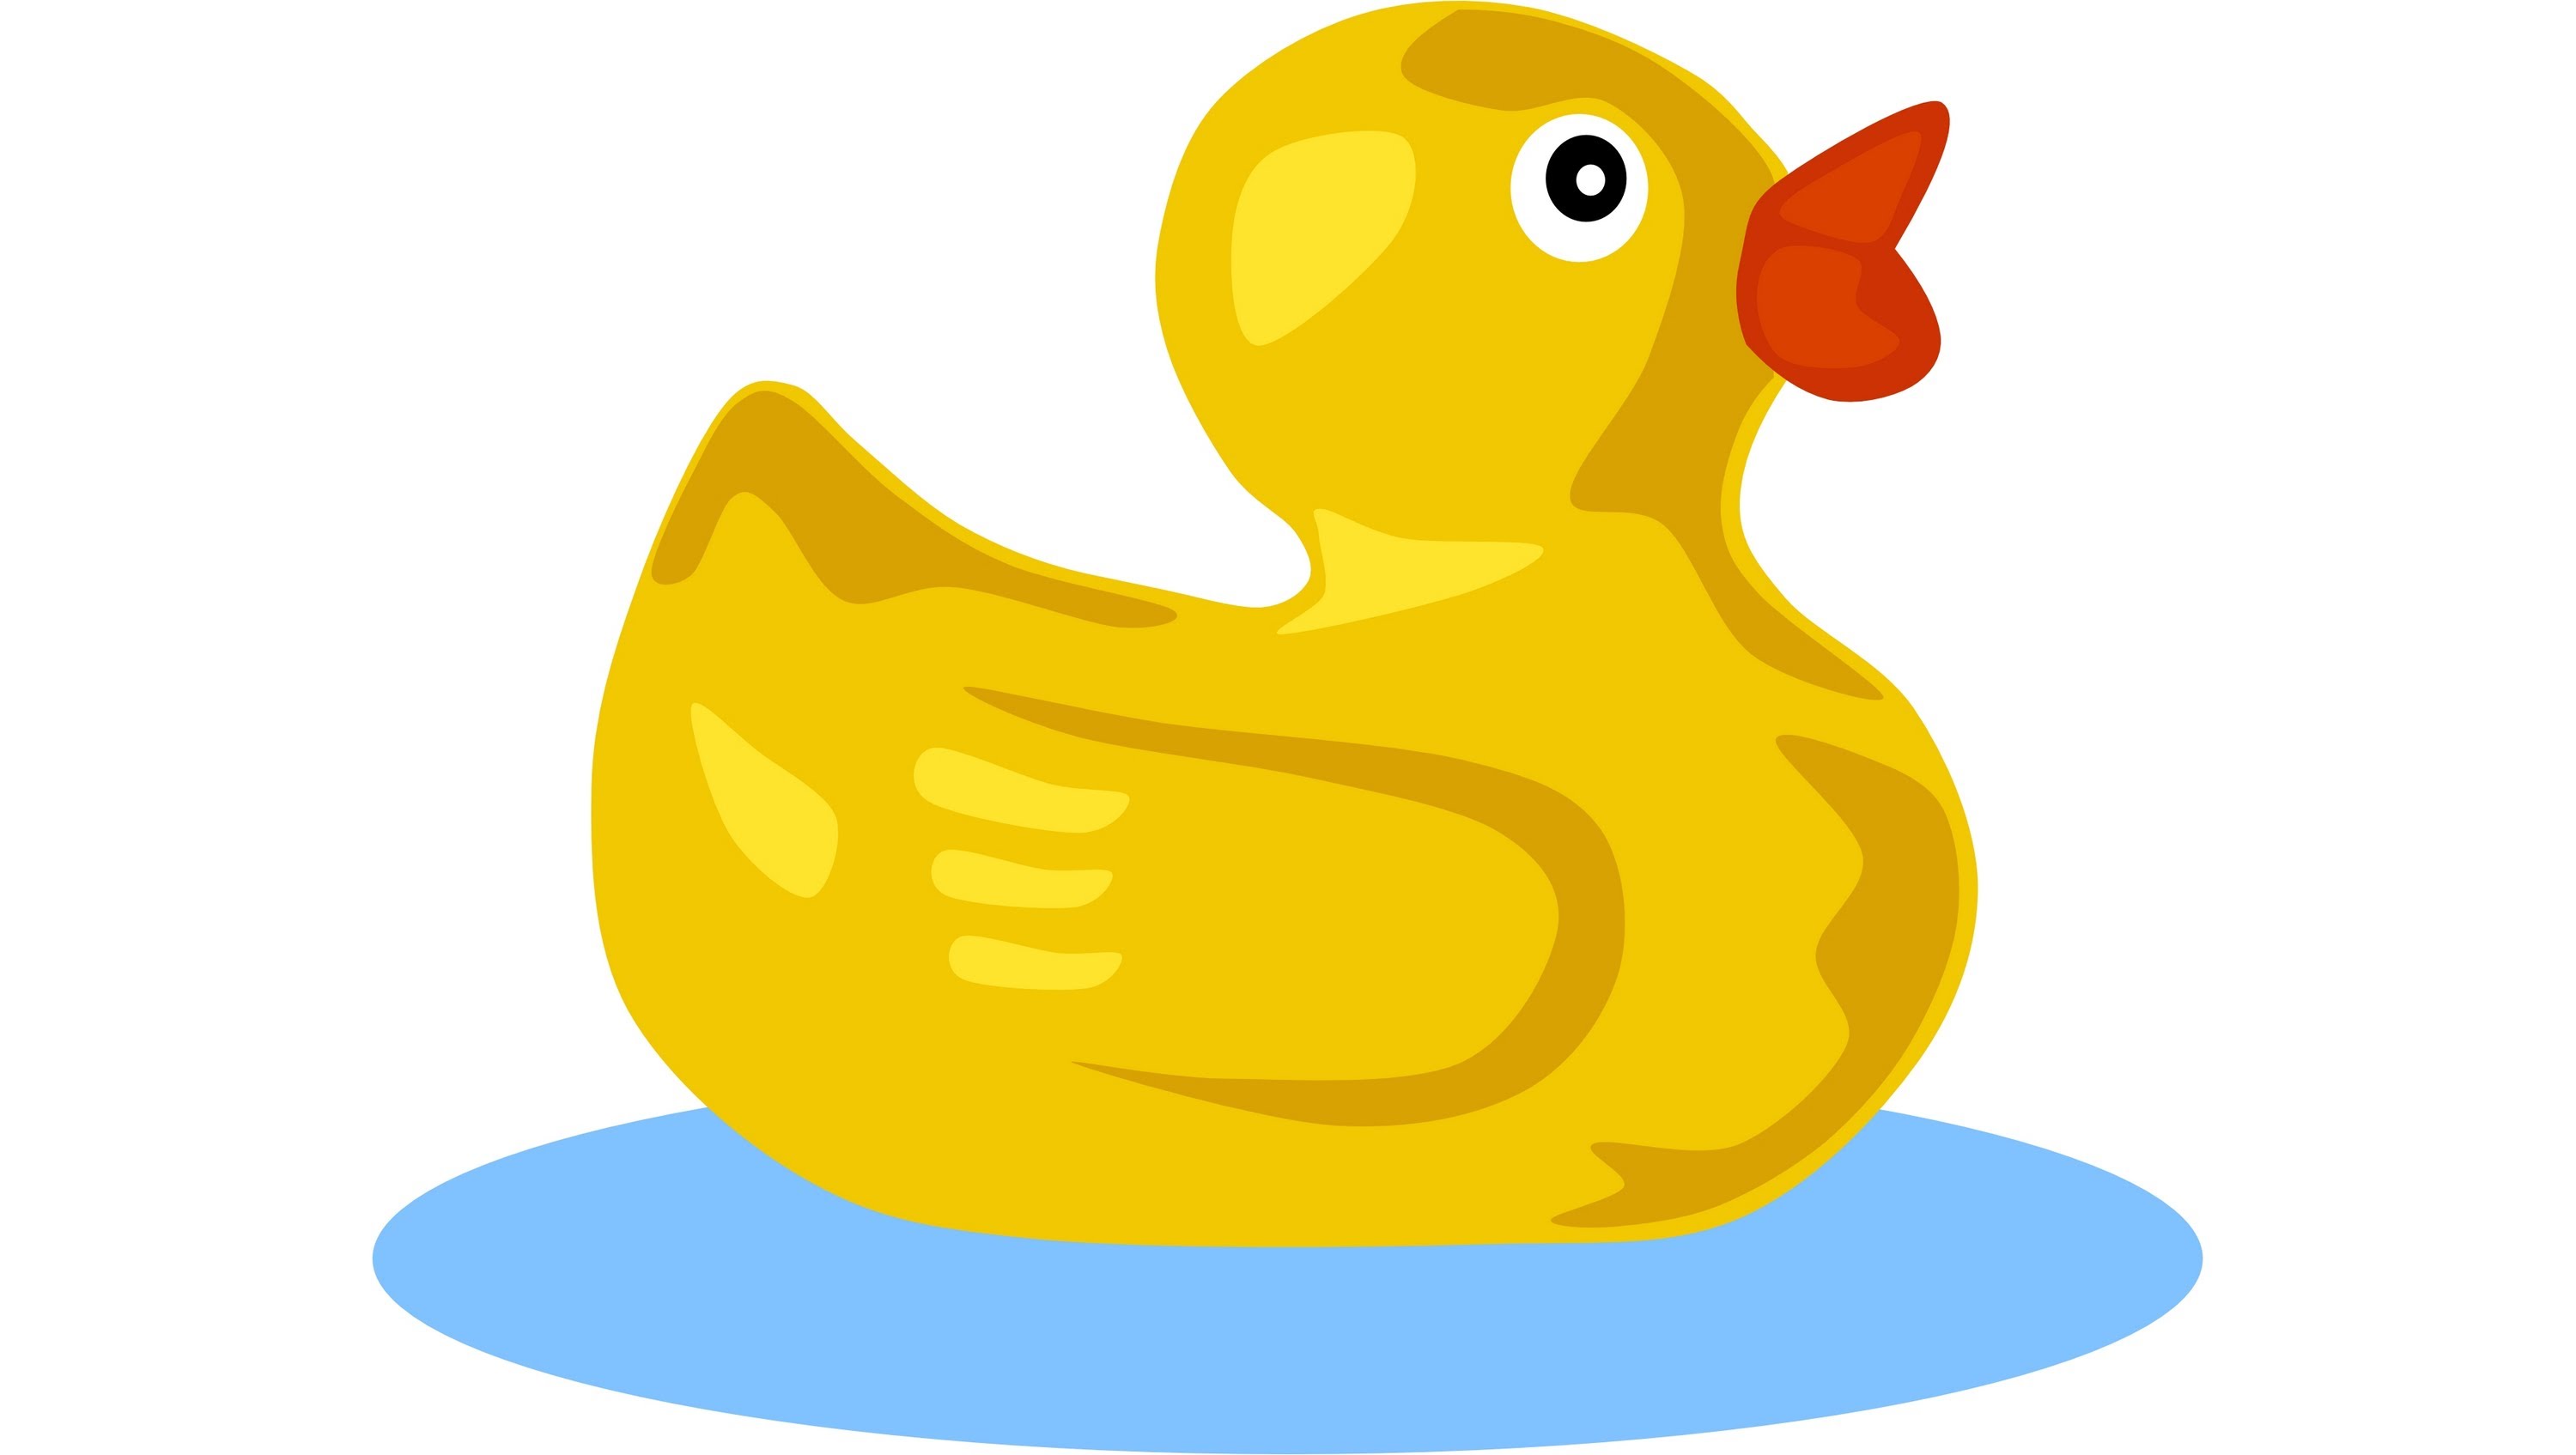 Duck quack sound effect - YouTube